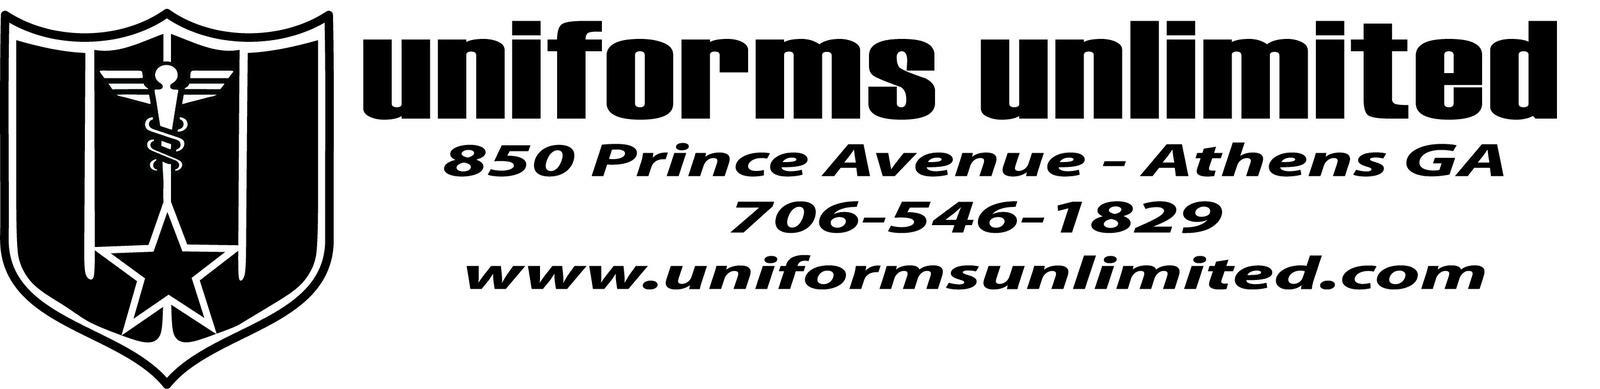 Uniforms Unlimited - Athens GA